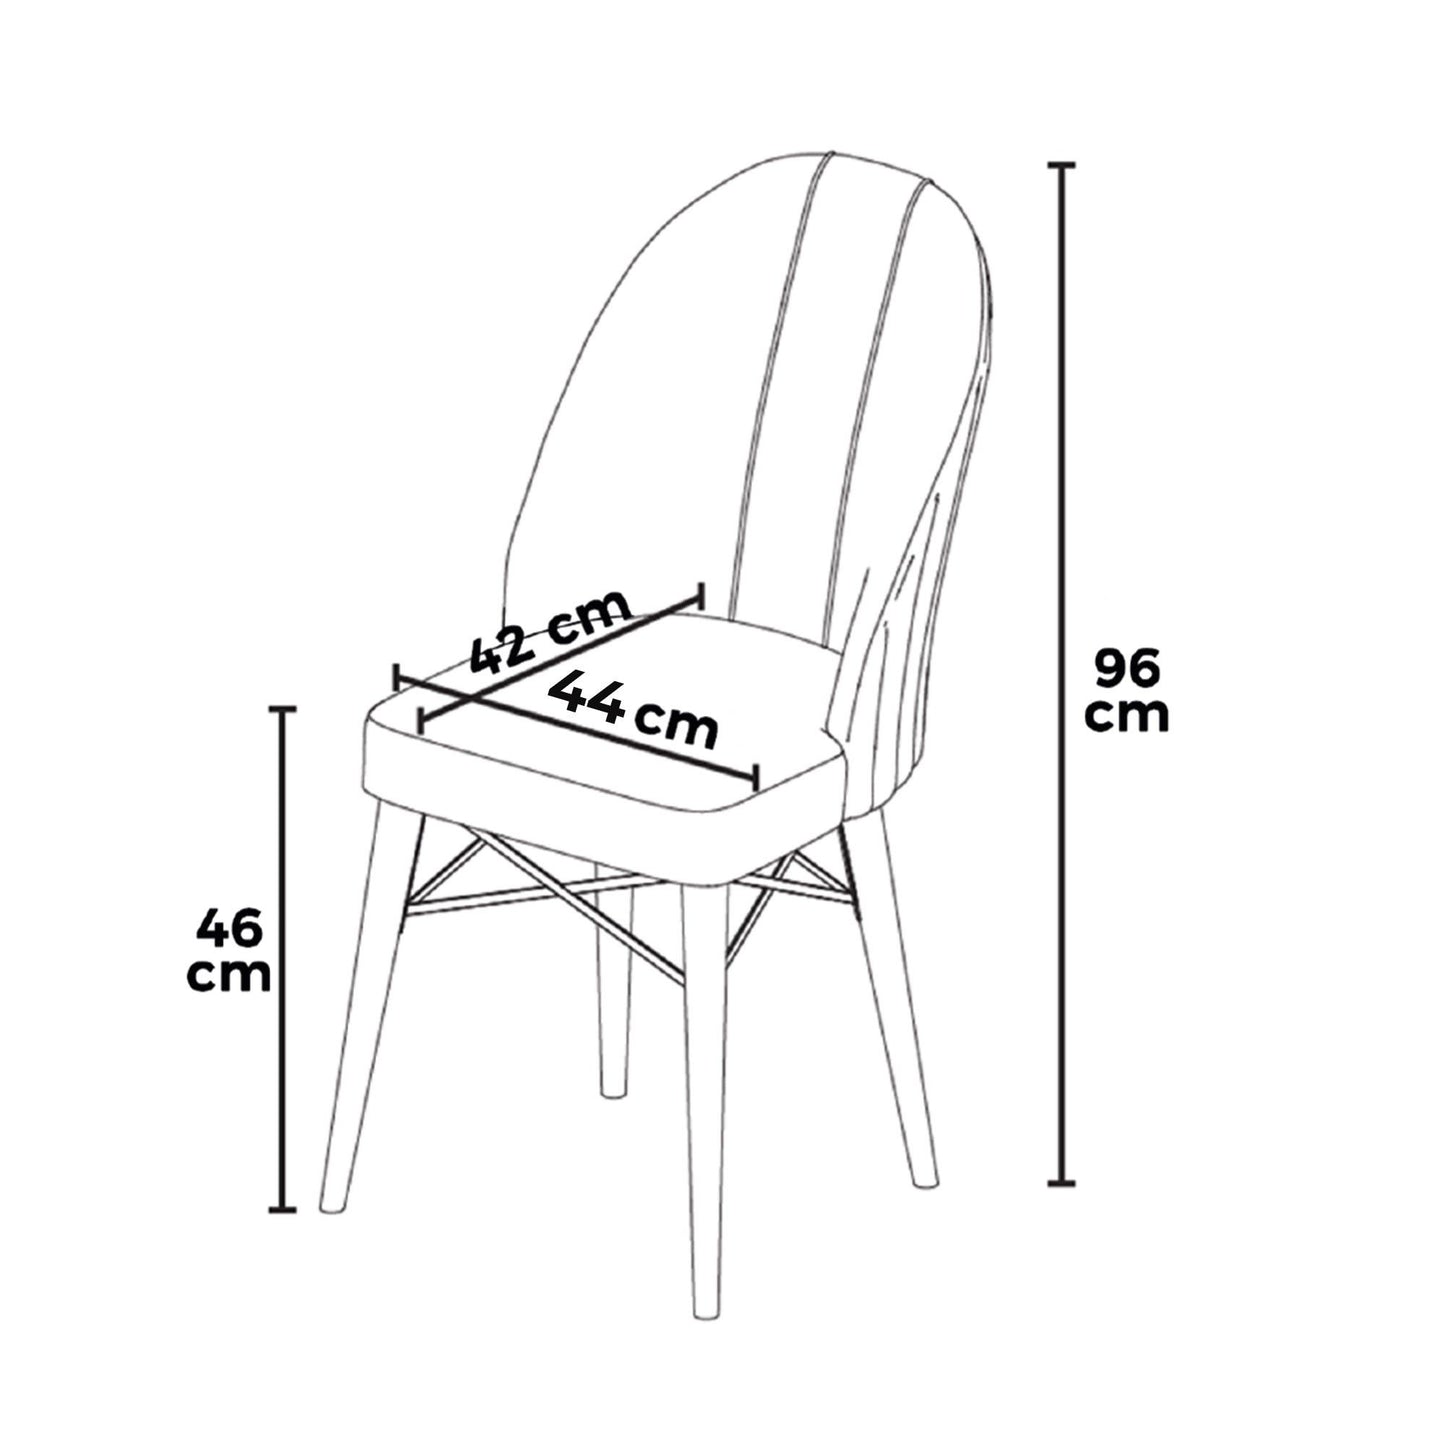 Ritim - Grey, Black - Chair Set (4 Pieces)